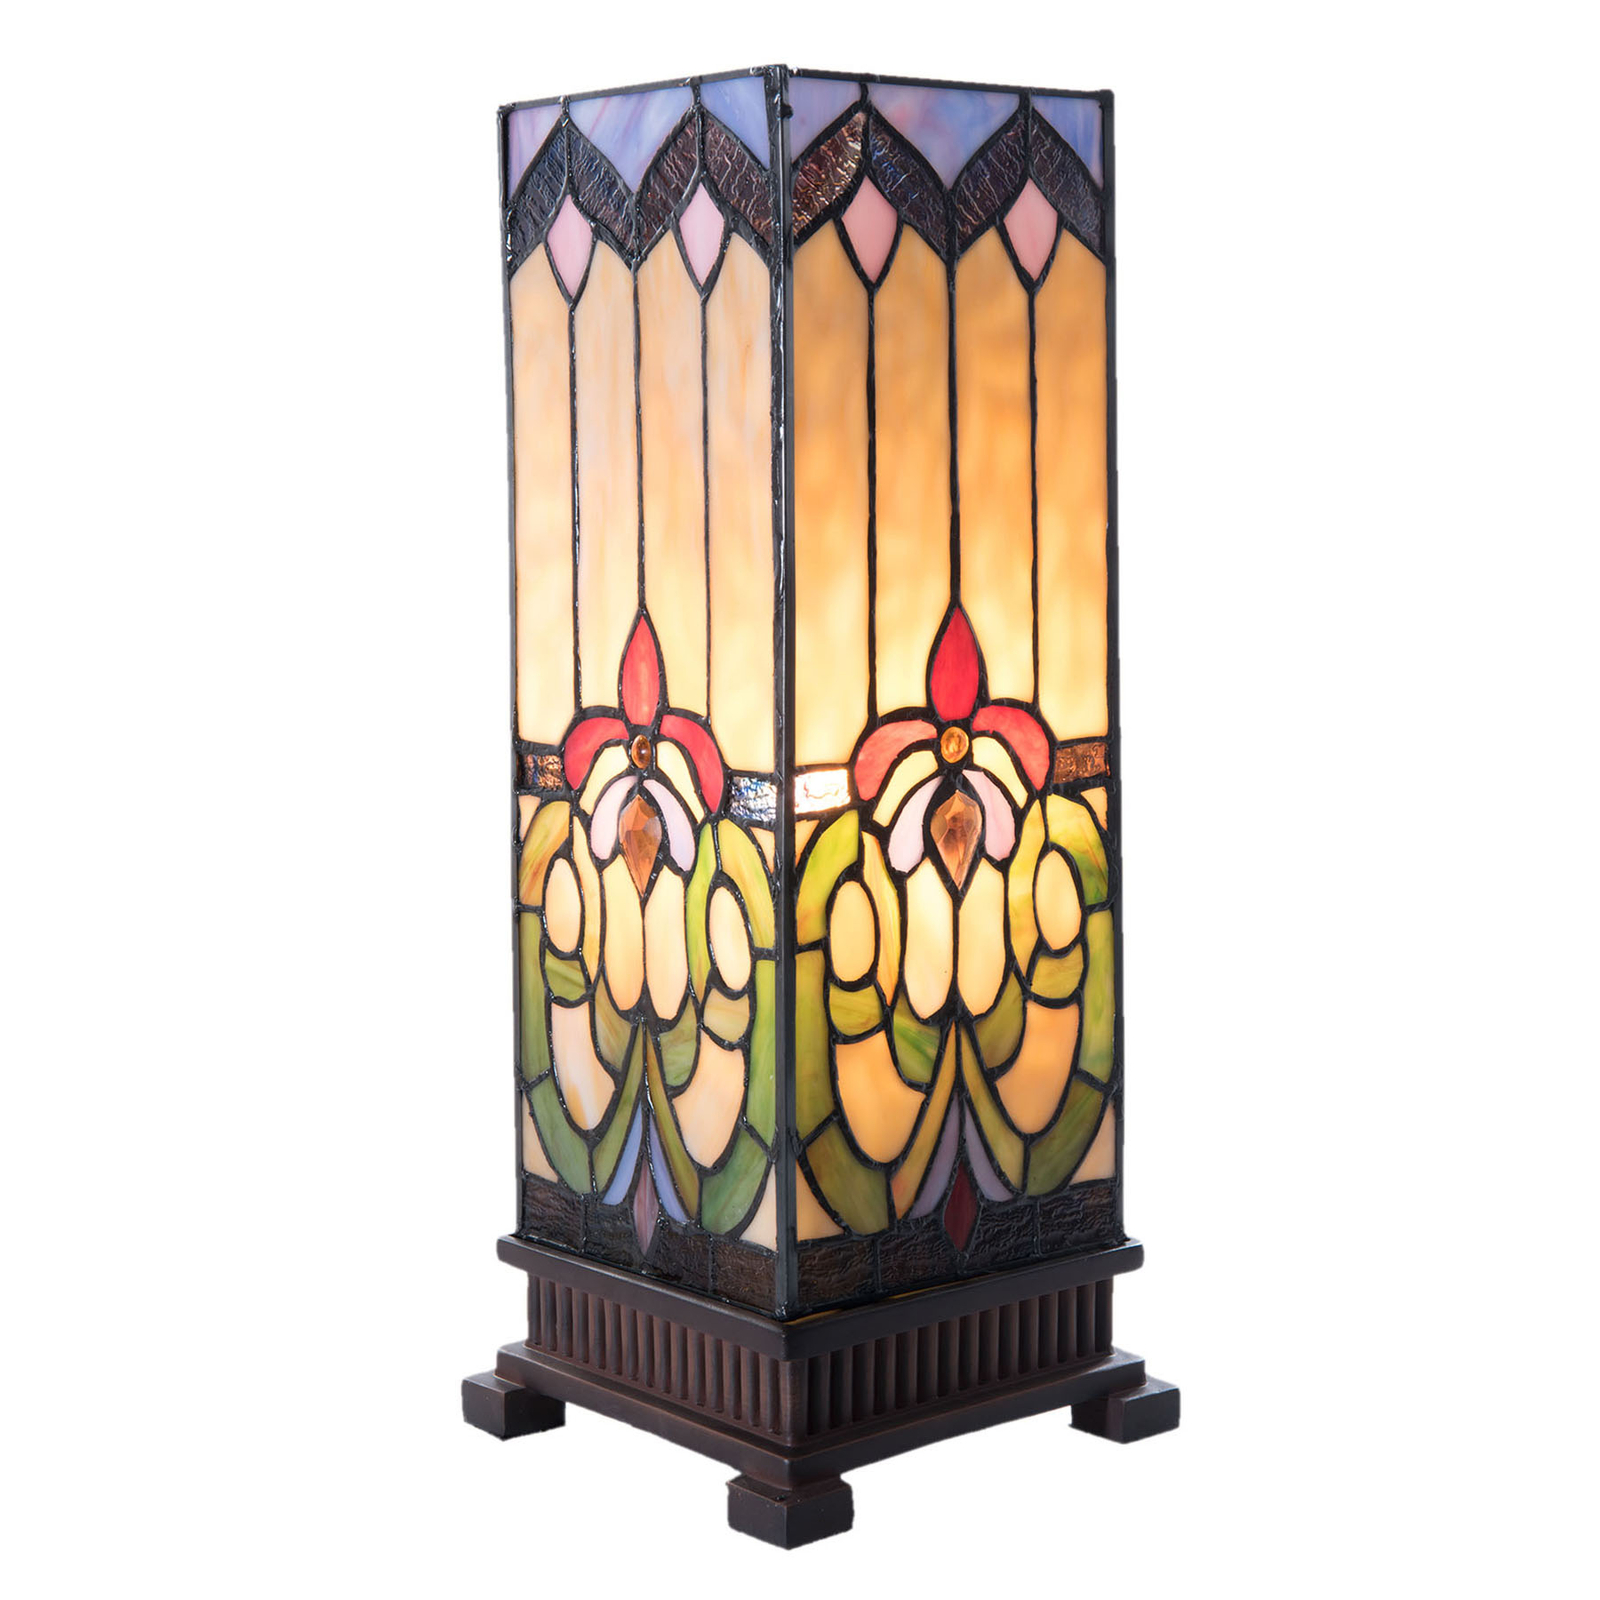 Tafellamp 5907, gekleurd glas in Tiffany-stijl